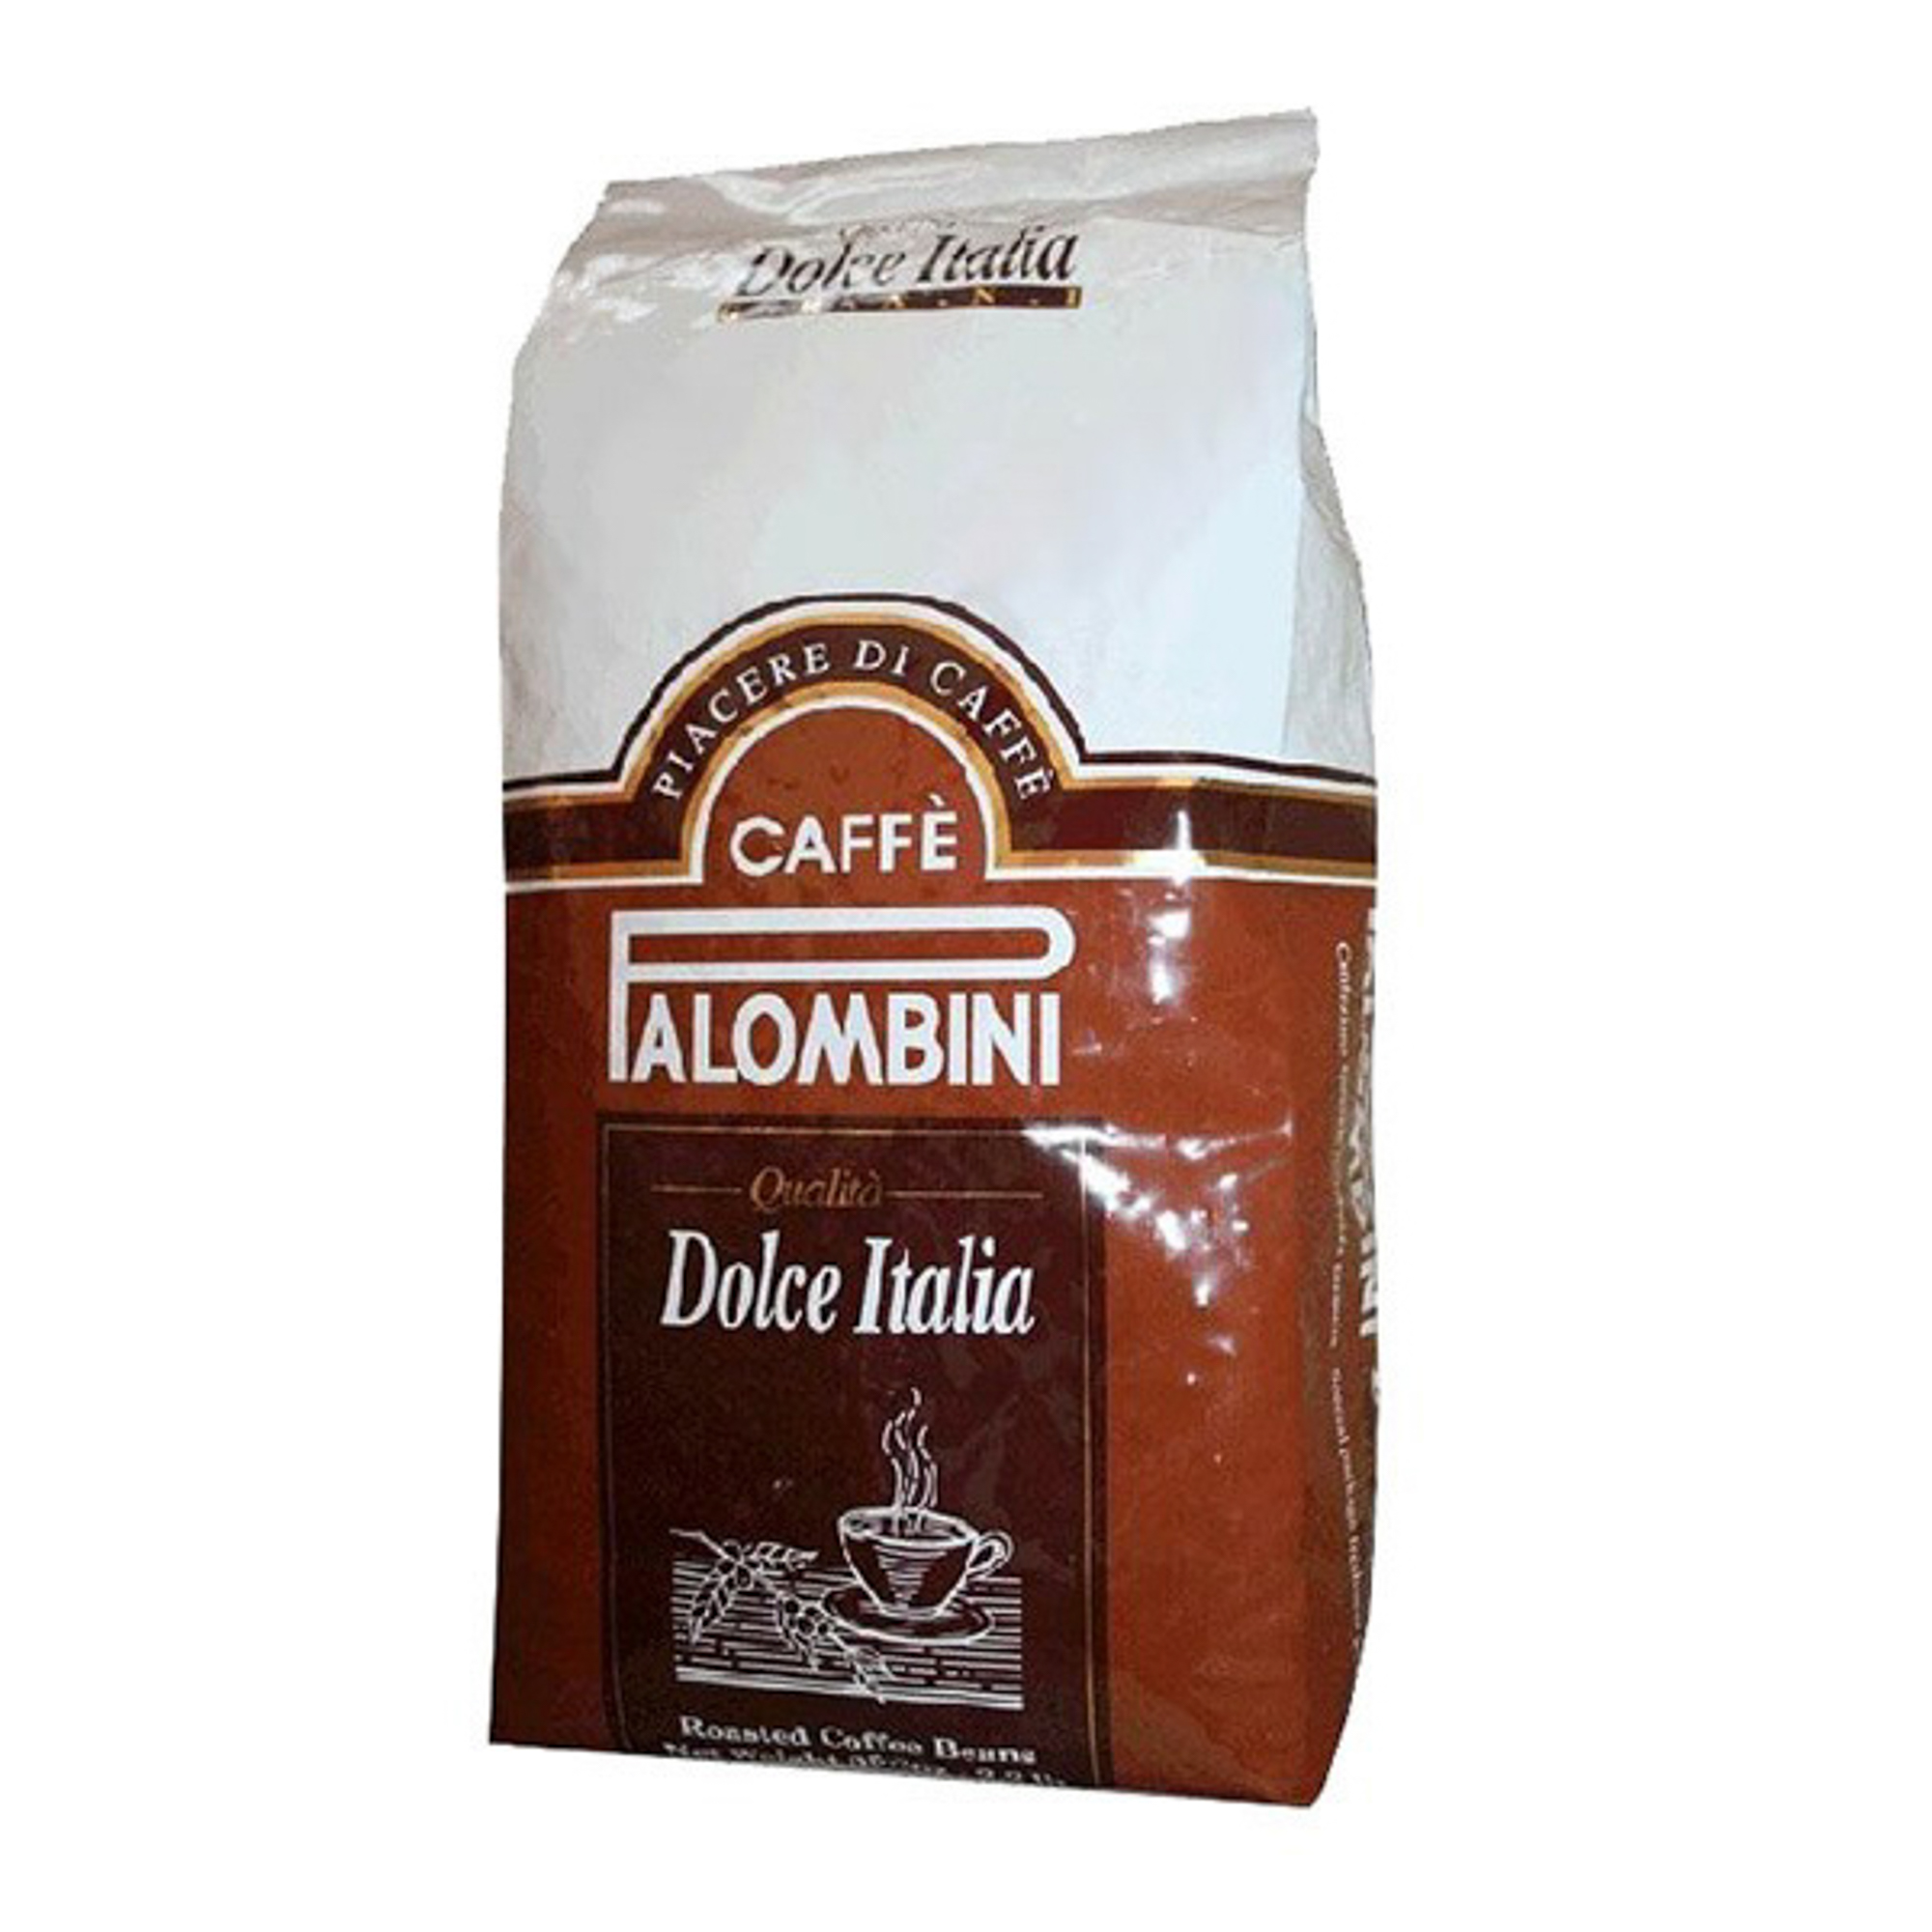 цена Кофе в зернах Palombini Dolce Italia 1 кг